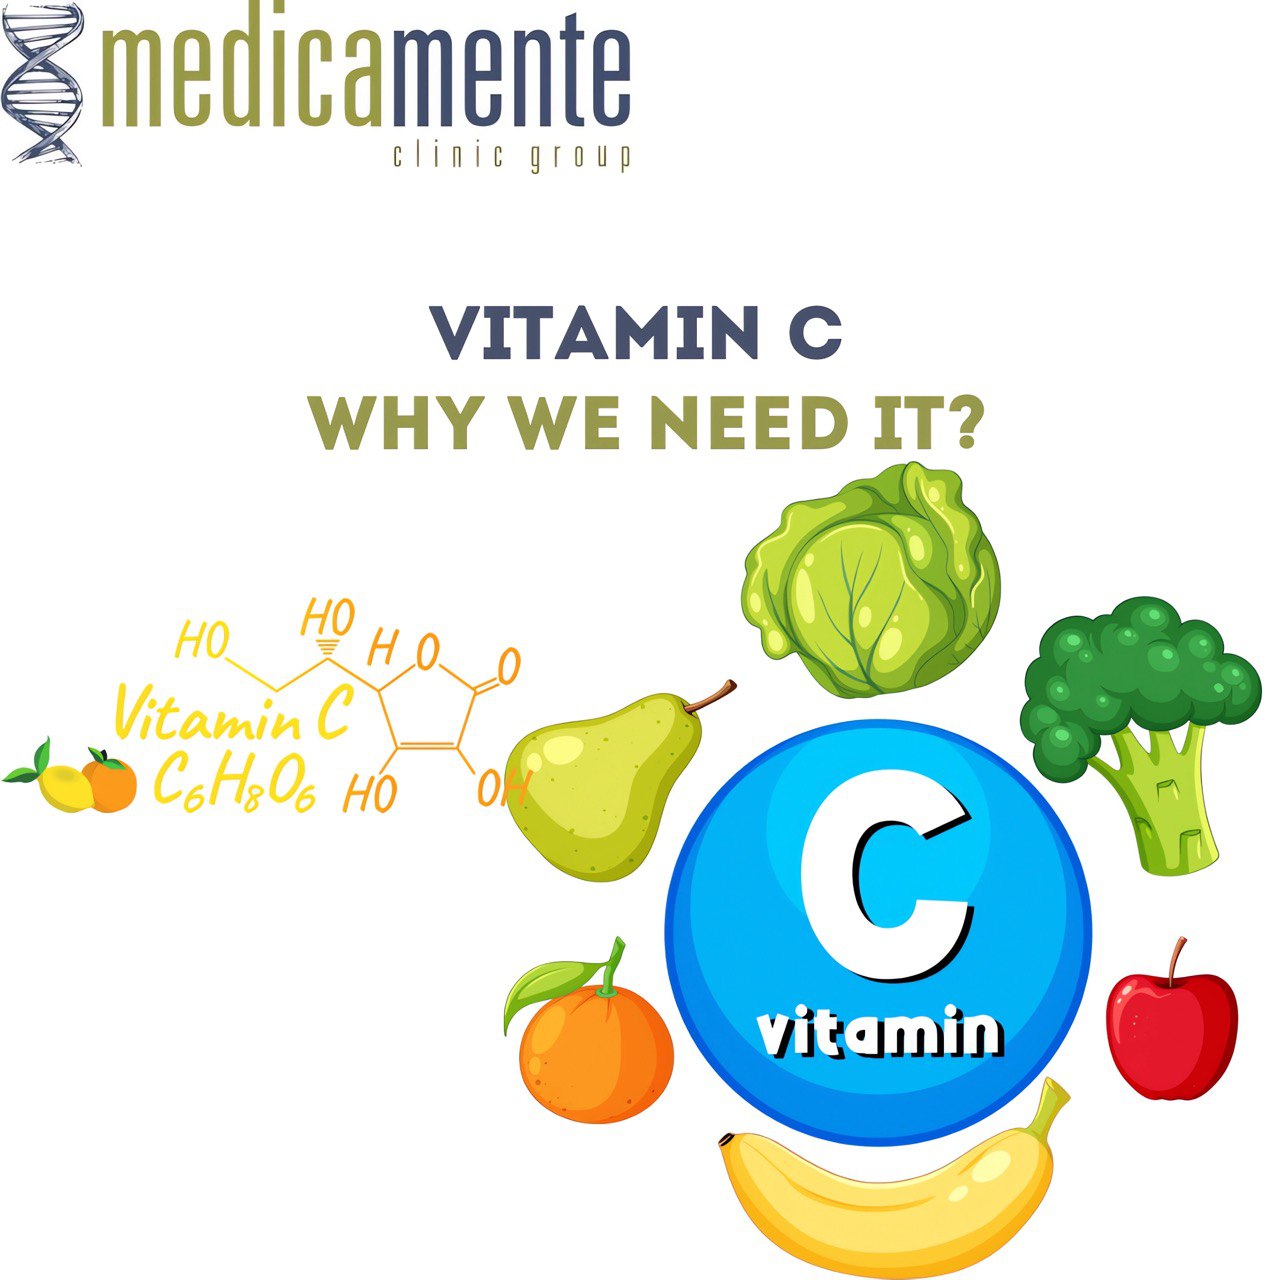 Why do we need vitamin C?